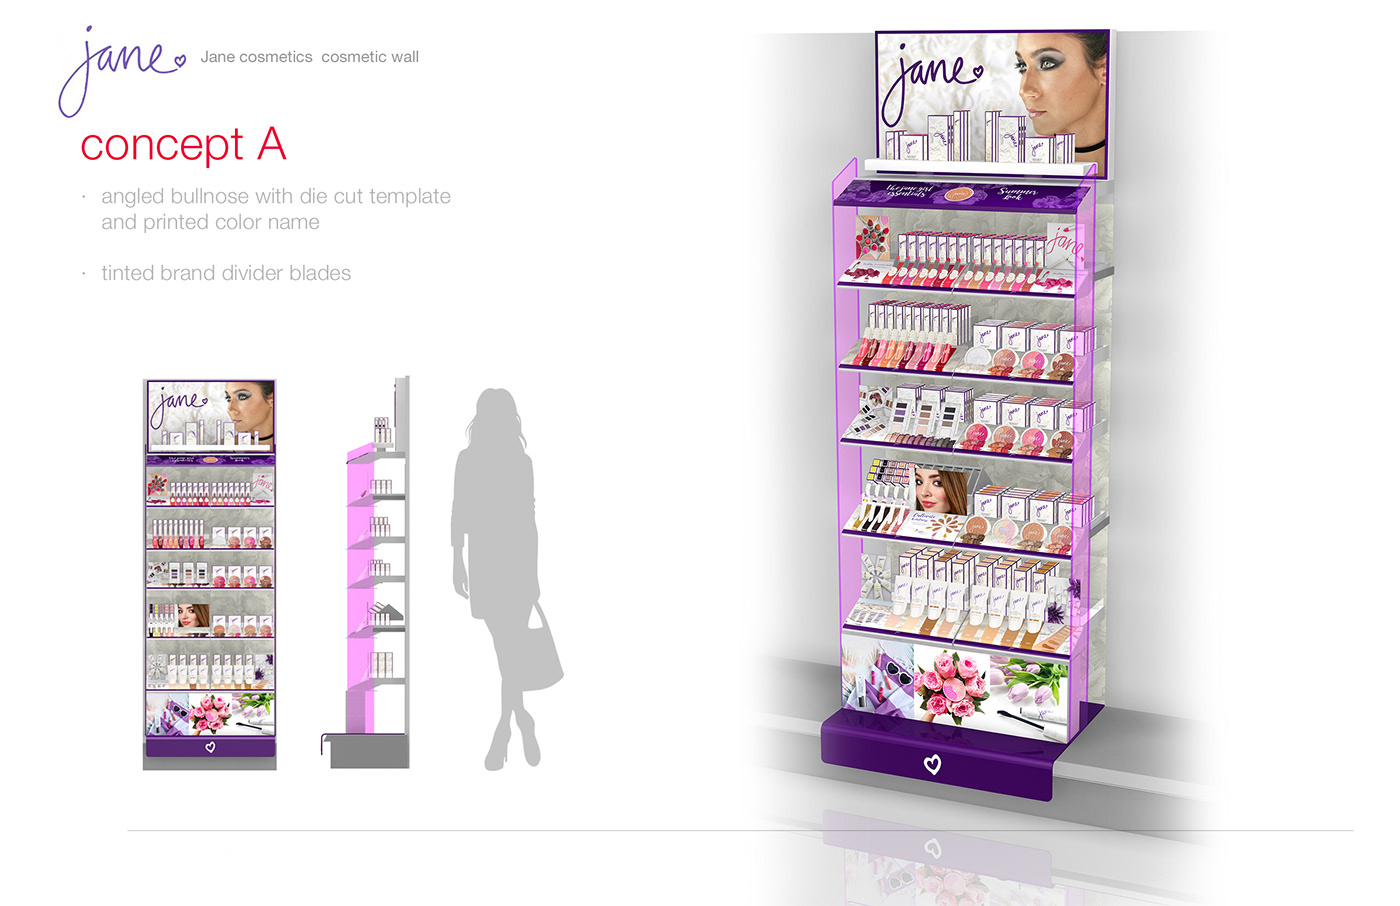 beauty wall cosmetics Cosmetics Display Display jane Jane Cosmetics pop POP Displays Ro Olvera rodrigo olvera